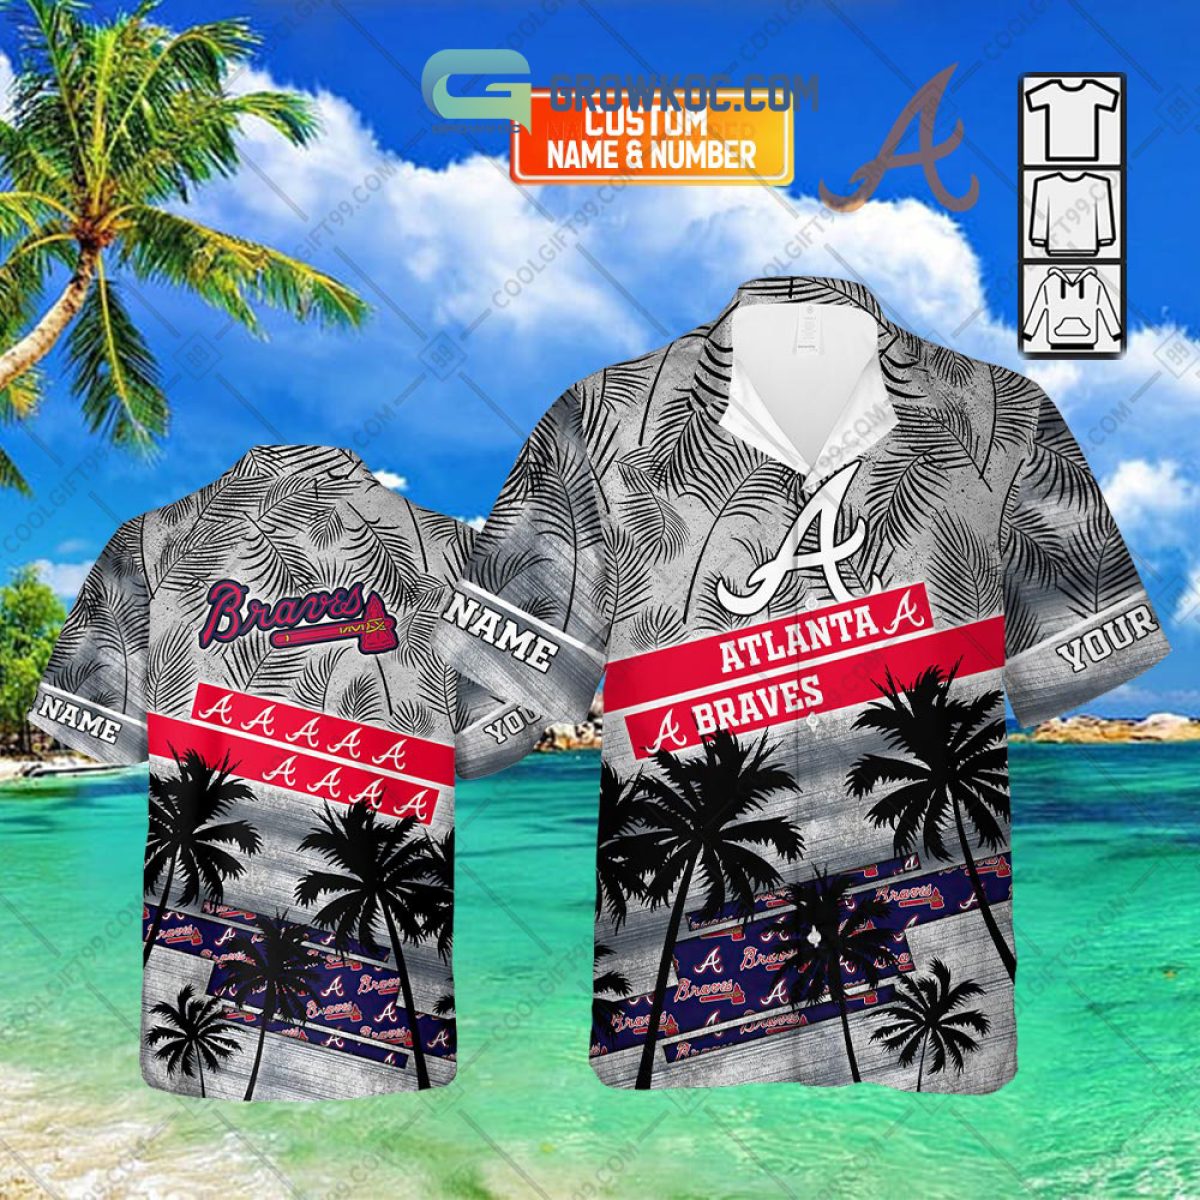 Atlanta Braves Funny Hawaiian Shirt - Growkoc